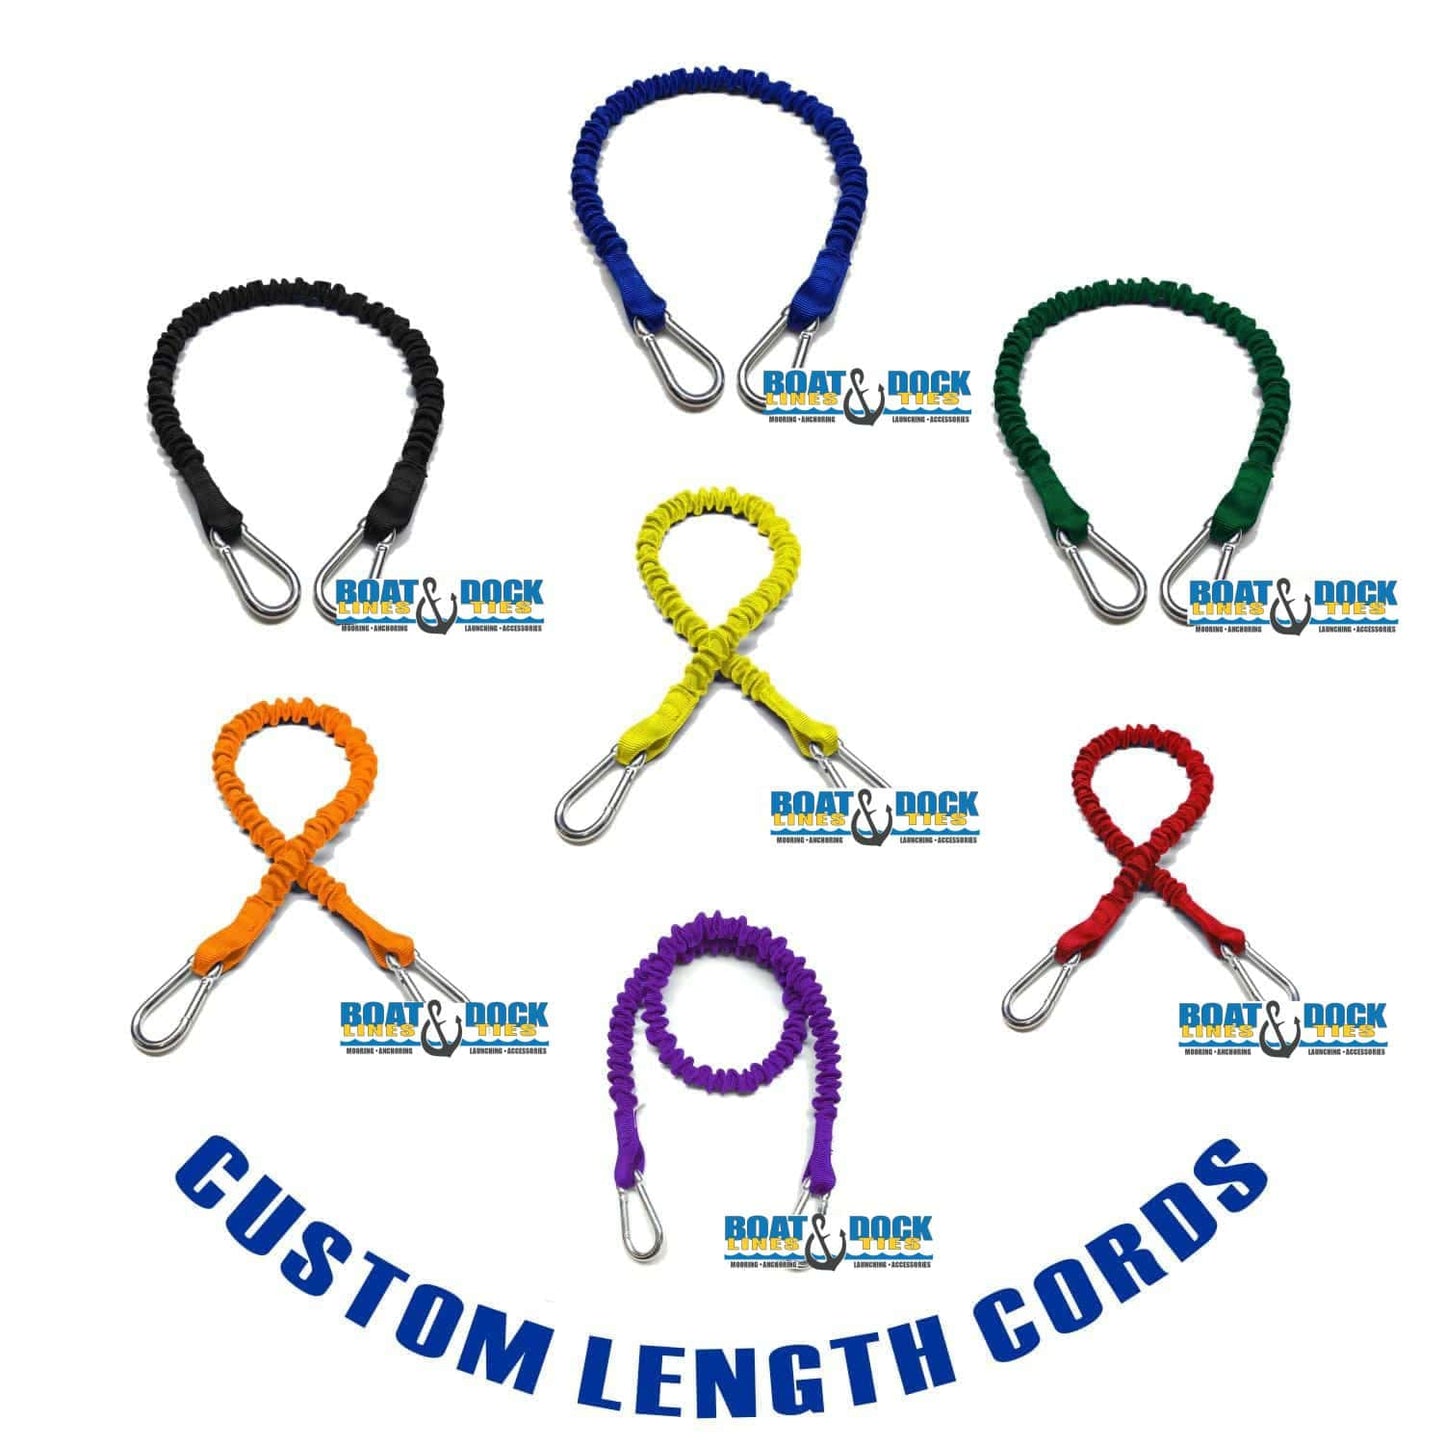 Custom Length 9mm (3/8") Boat Dock Tie Cords with 2 Hooks